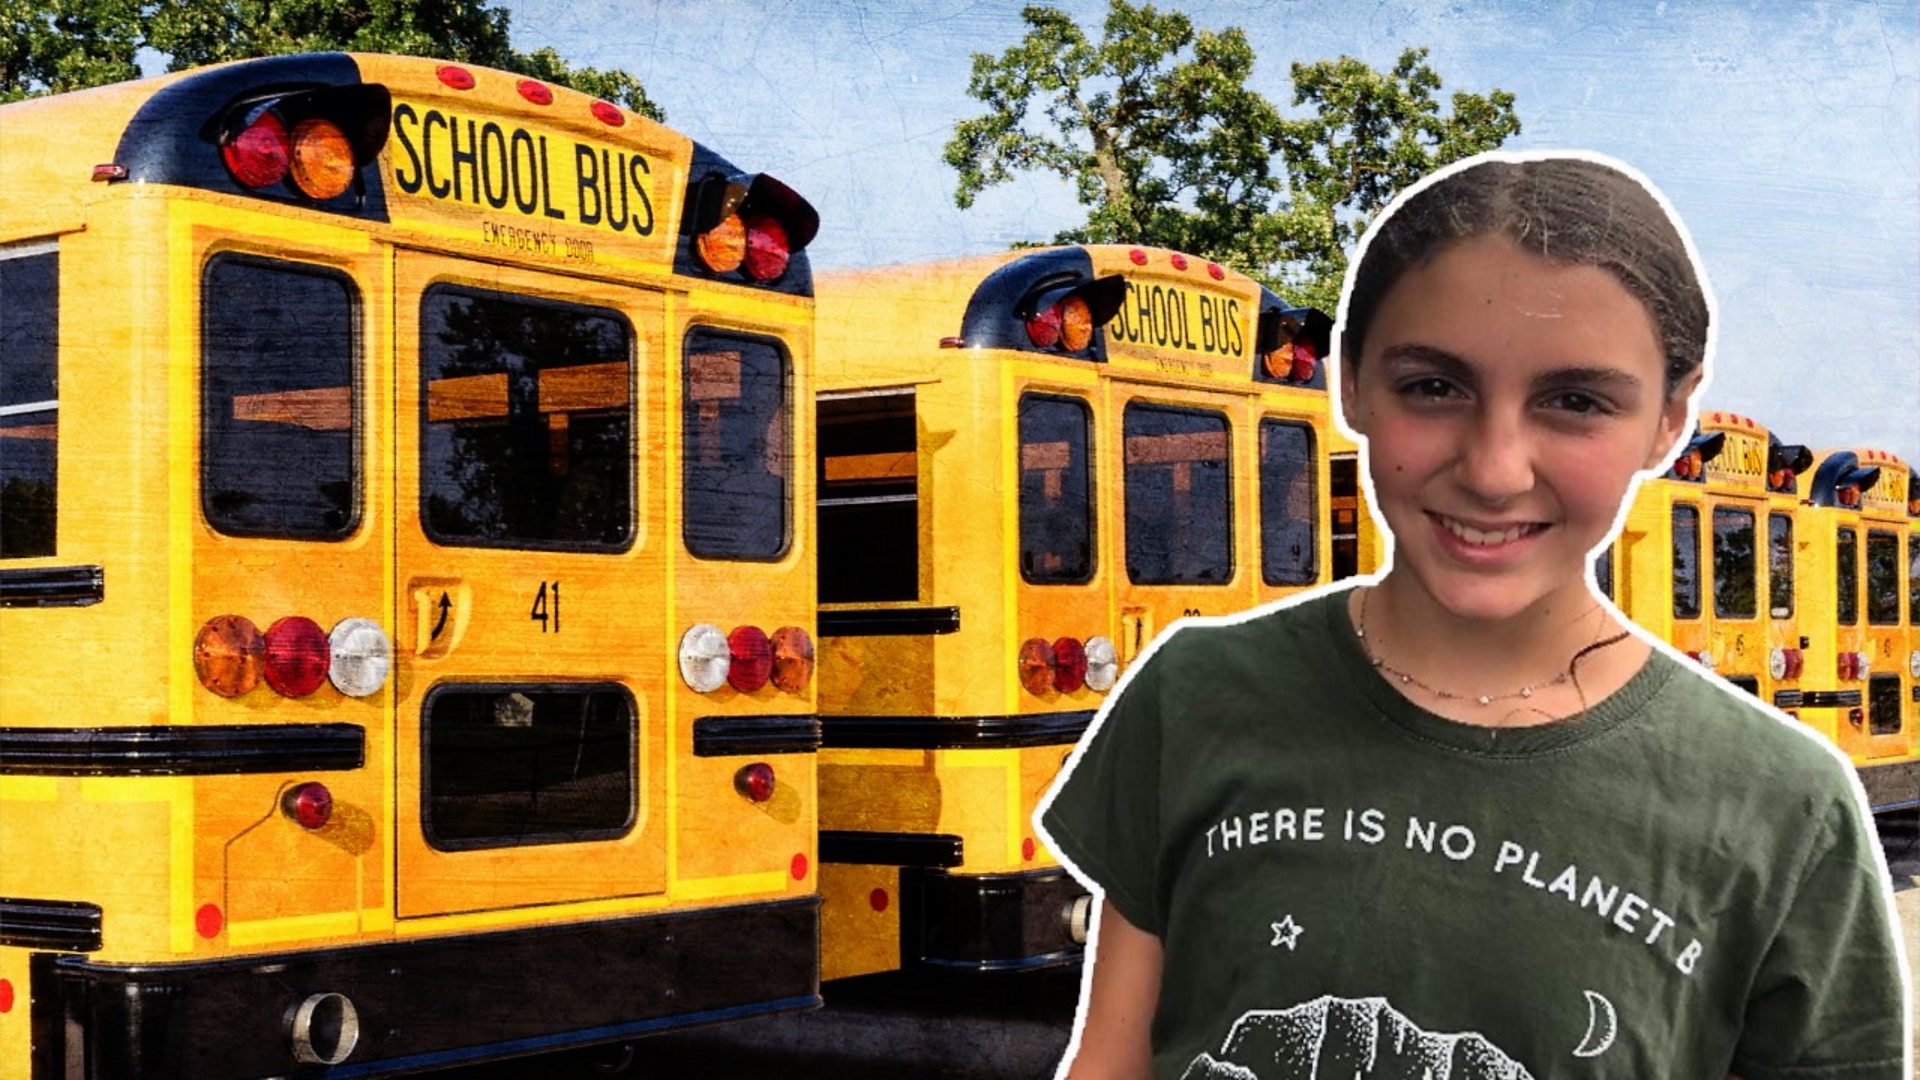 Schoolgirl Takes Bbc On School Bus